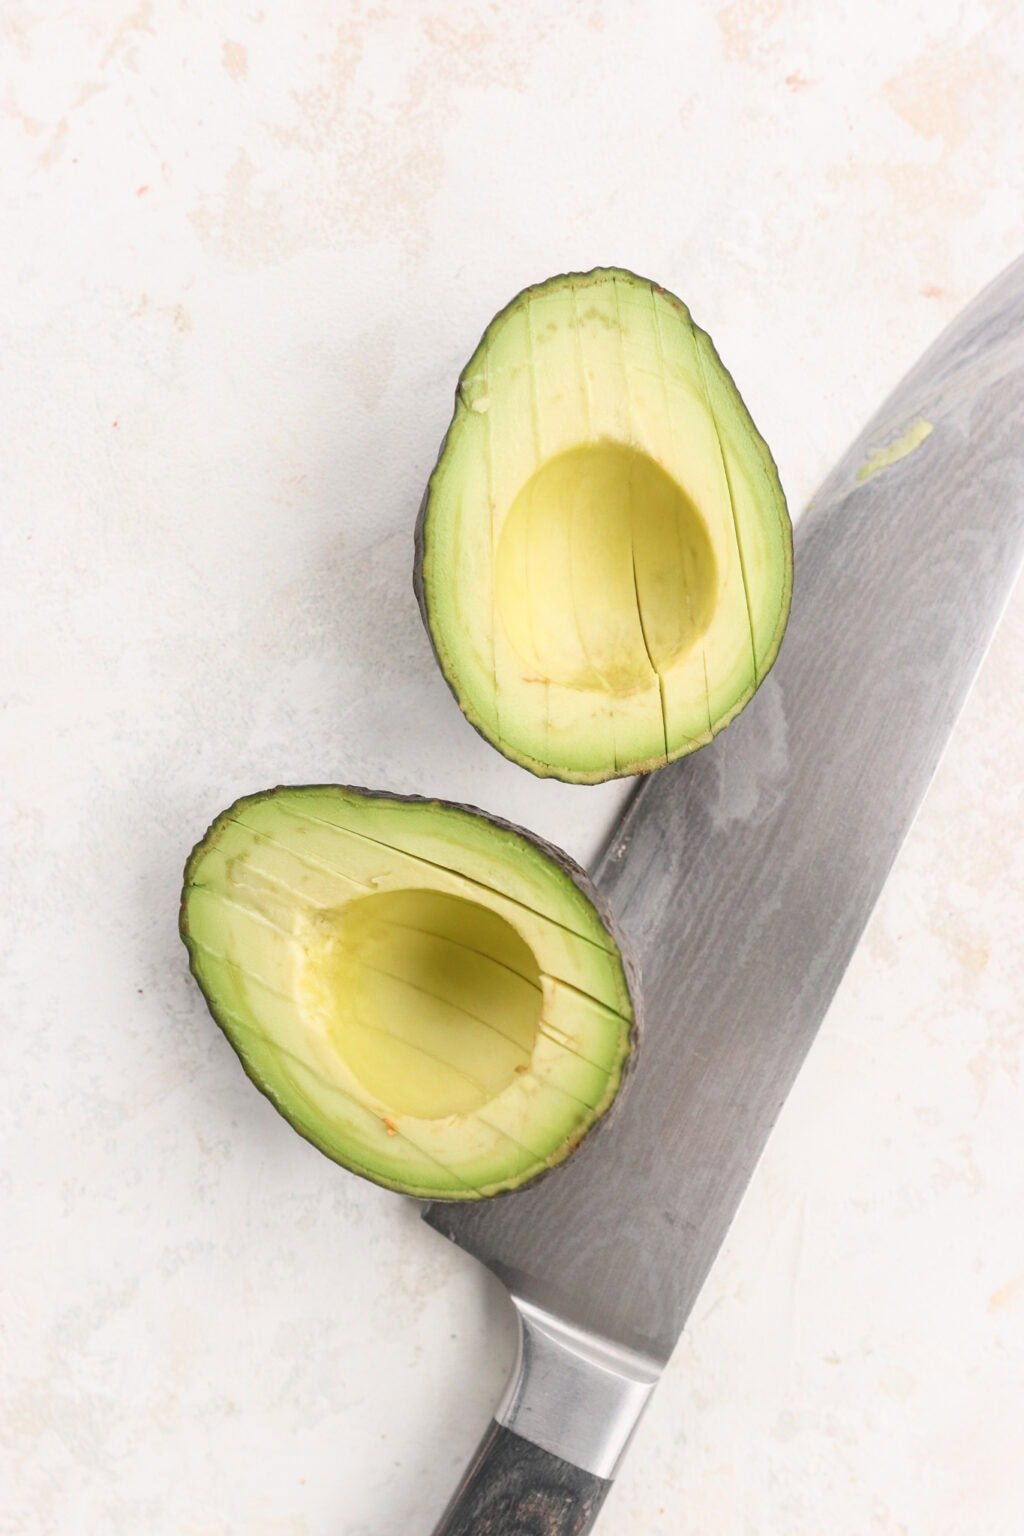 An avocado cut in half with a knife beside it